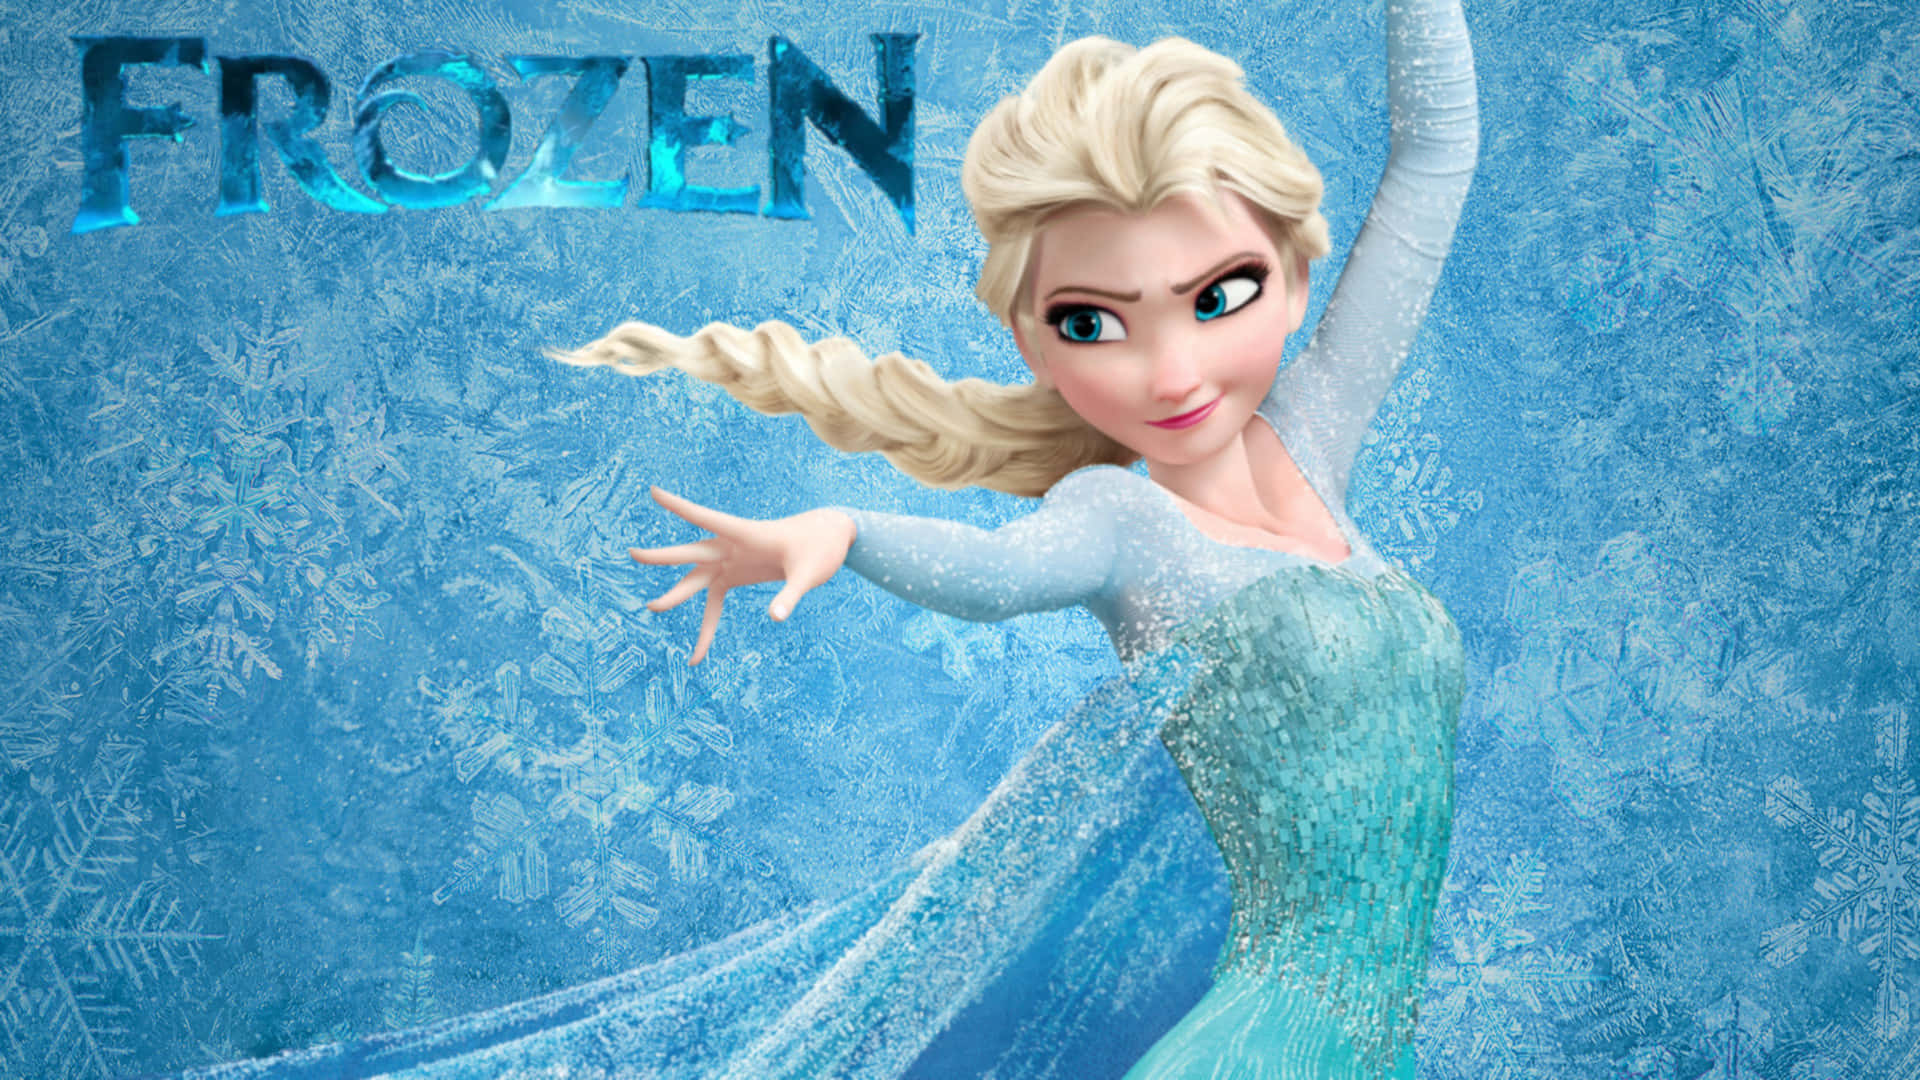 Let your imagination take flight with Elsa